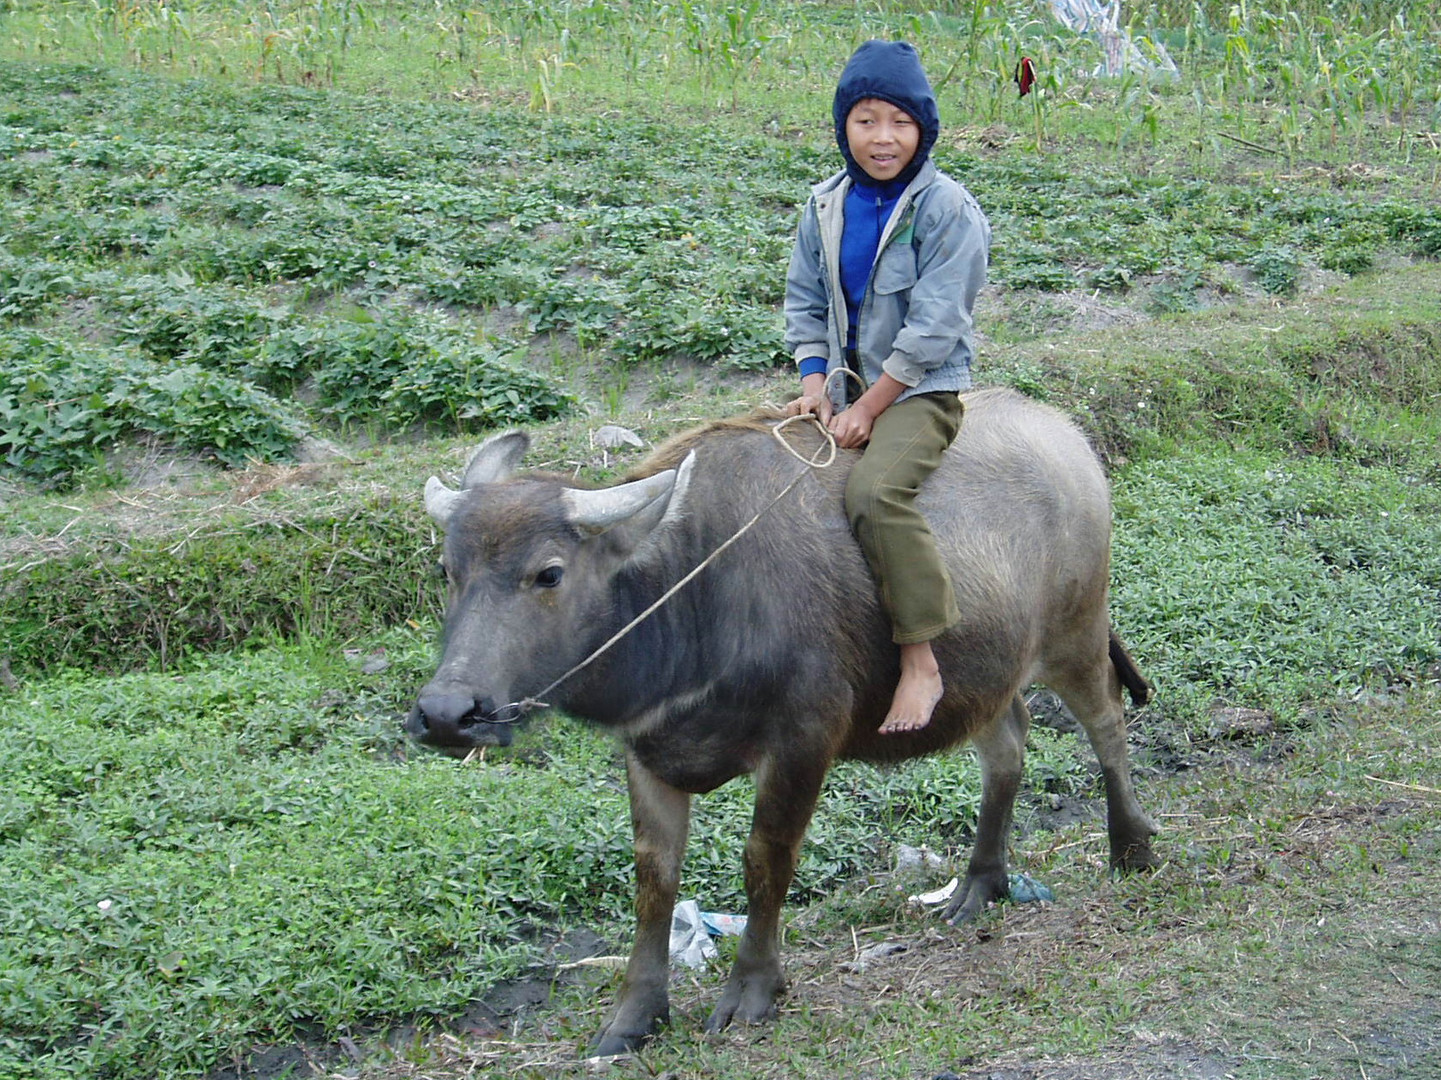 Street scene: Boy riding a waterbuffalo